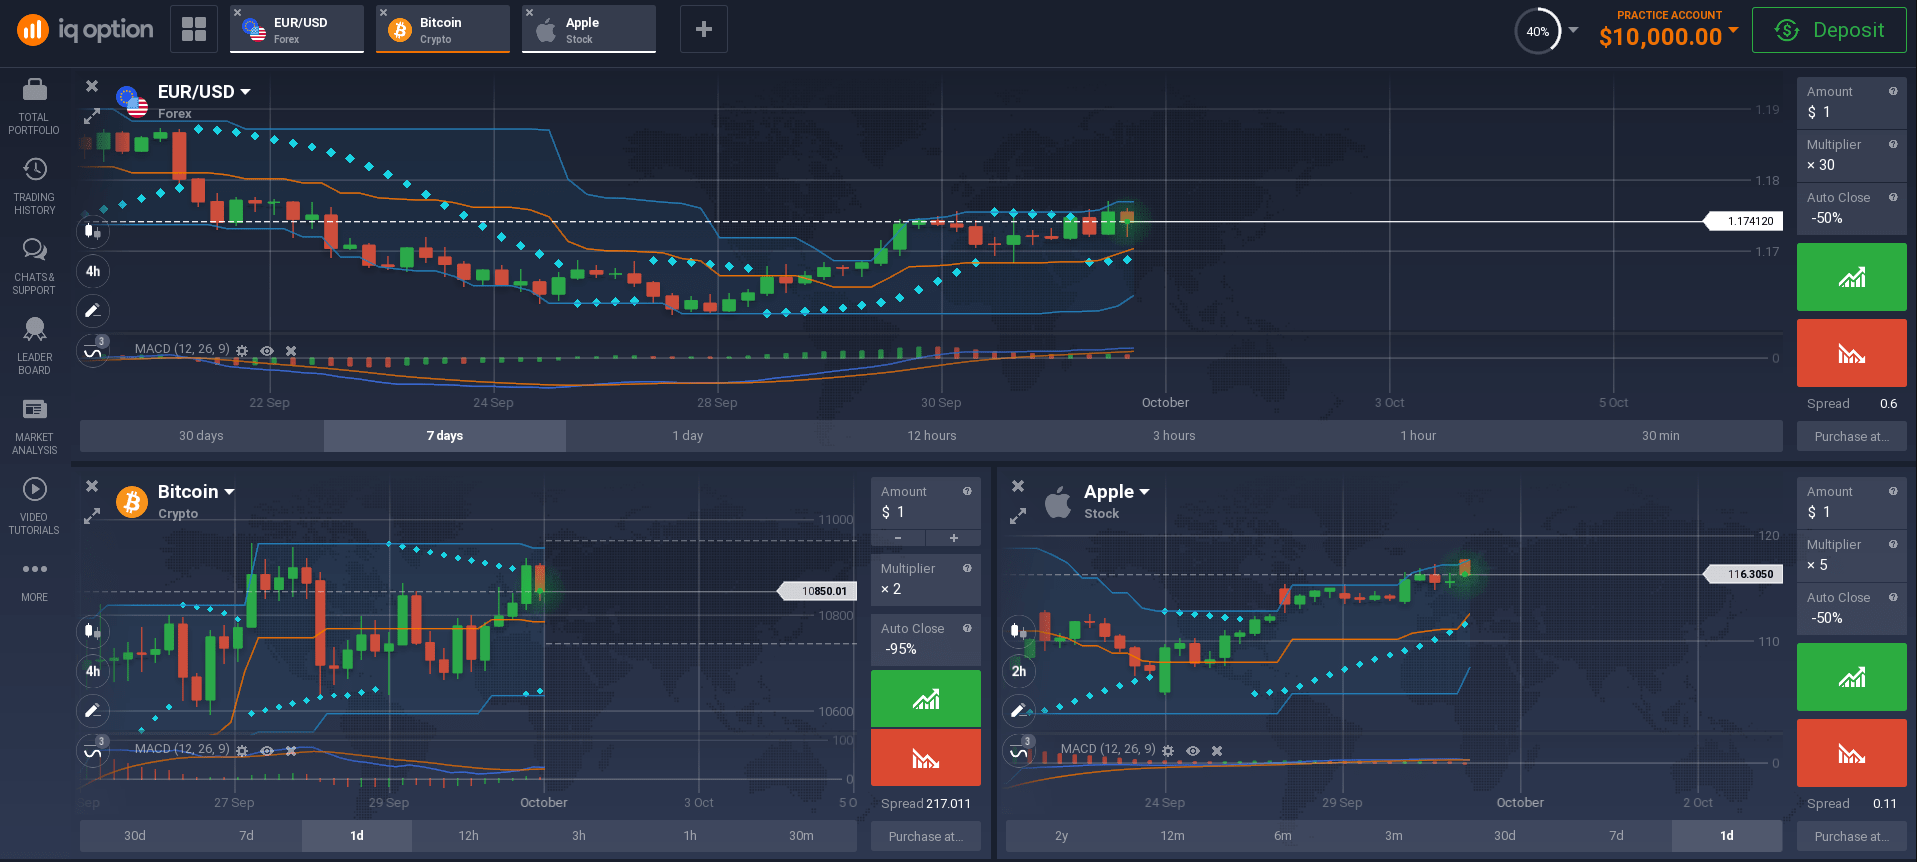 iq option trading platform review